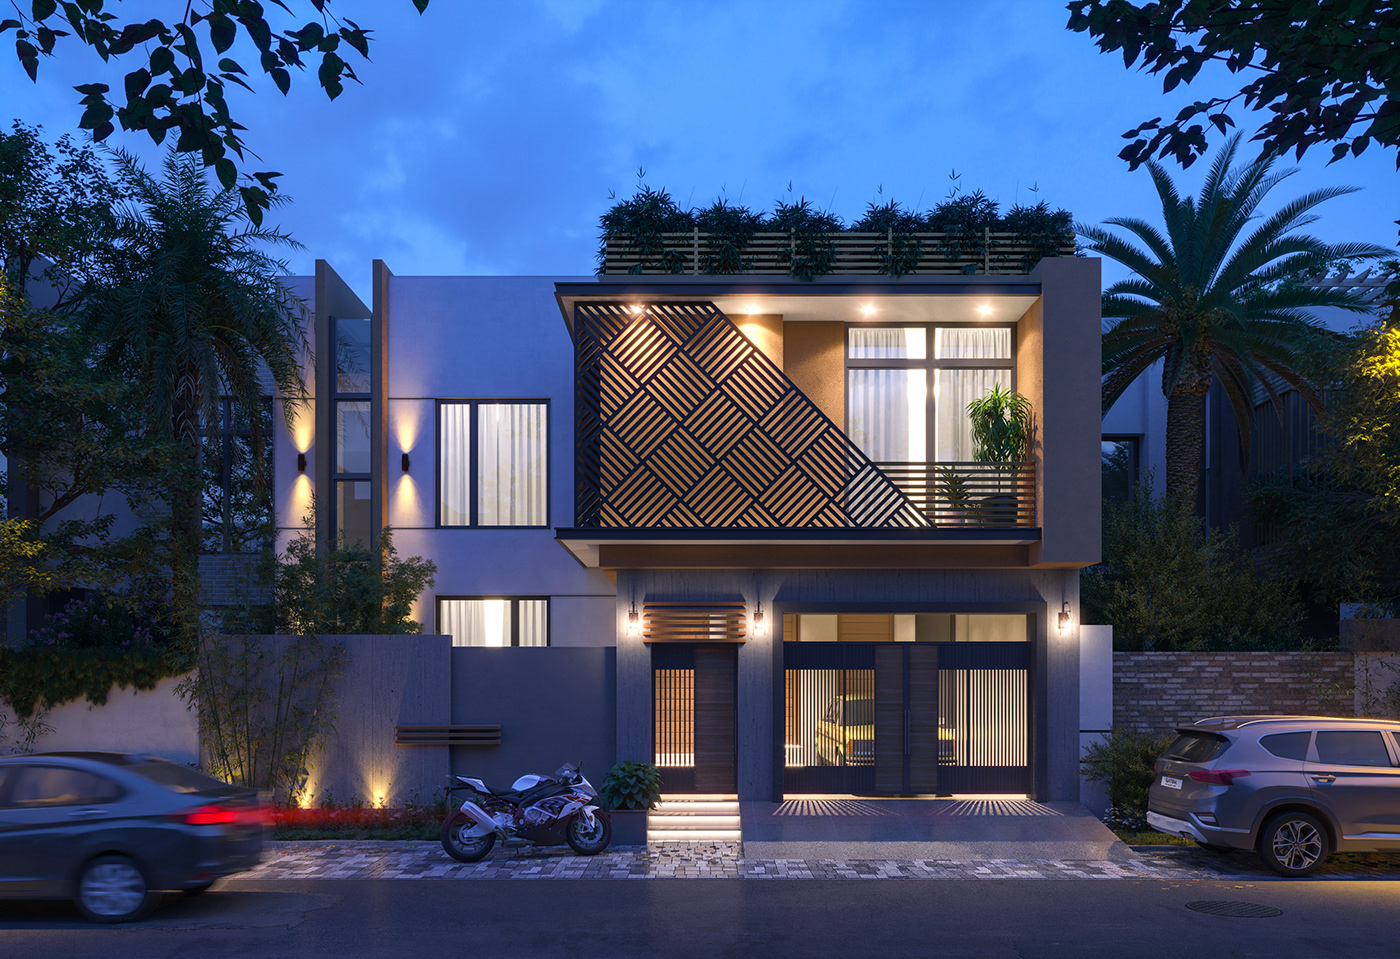 3ds max architecture design corona render  exterior design Facade design HOUSE DESIGN house visualization Tanzeel Amjad team studio3 ushba urooj